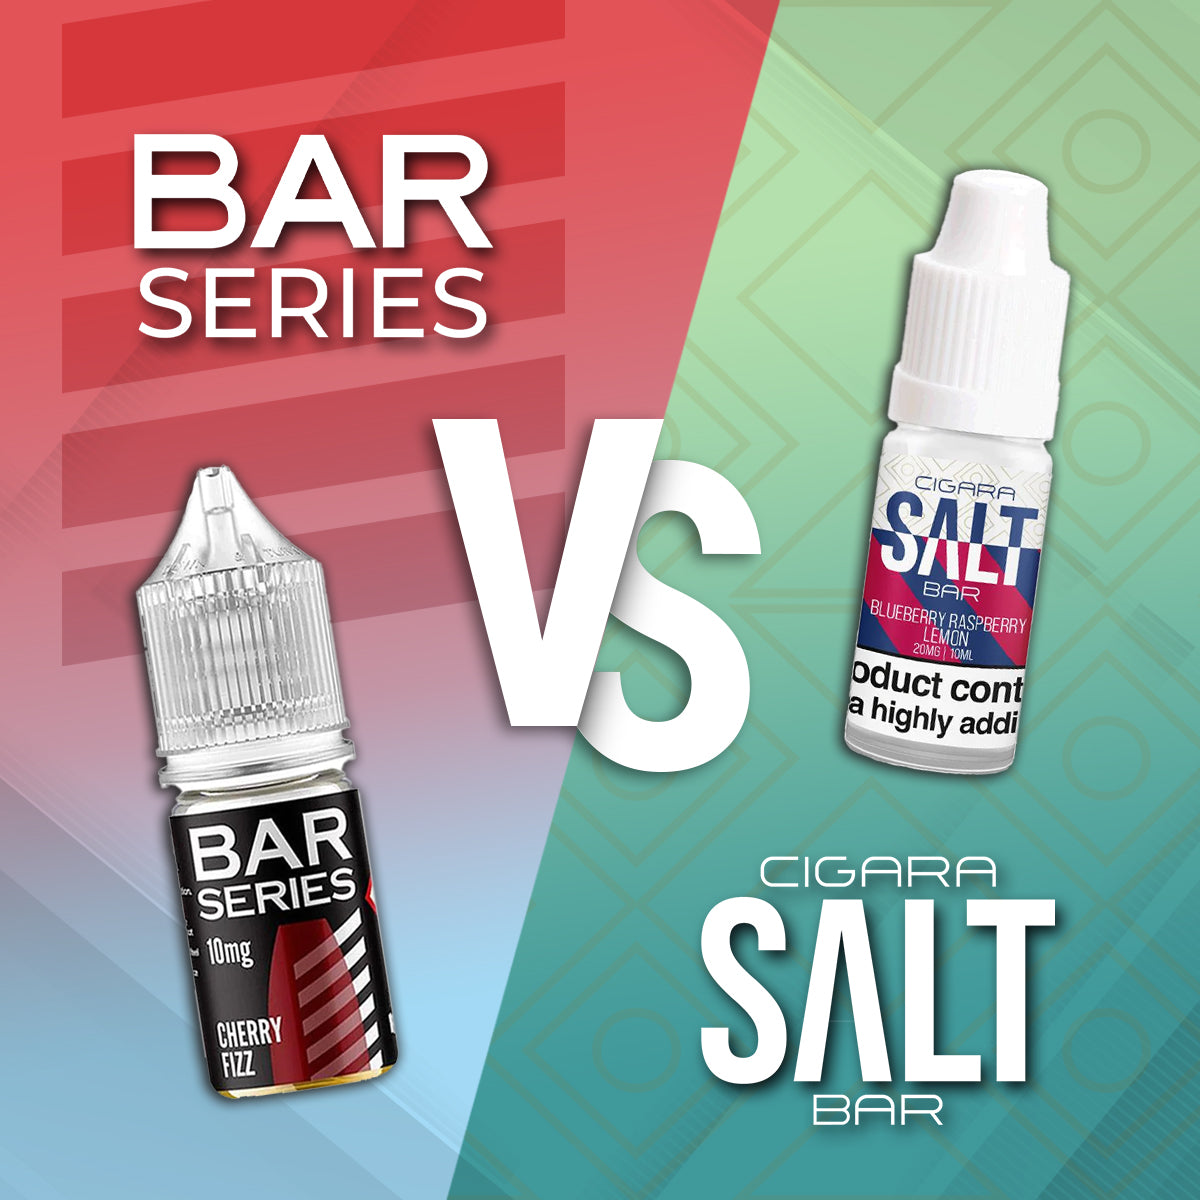 Bar Series Salts Vs Cigara Salt Bar Comparison Review